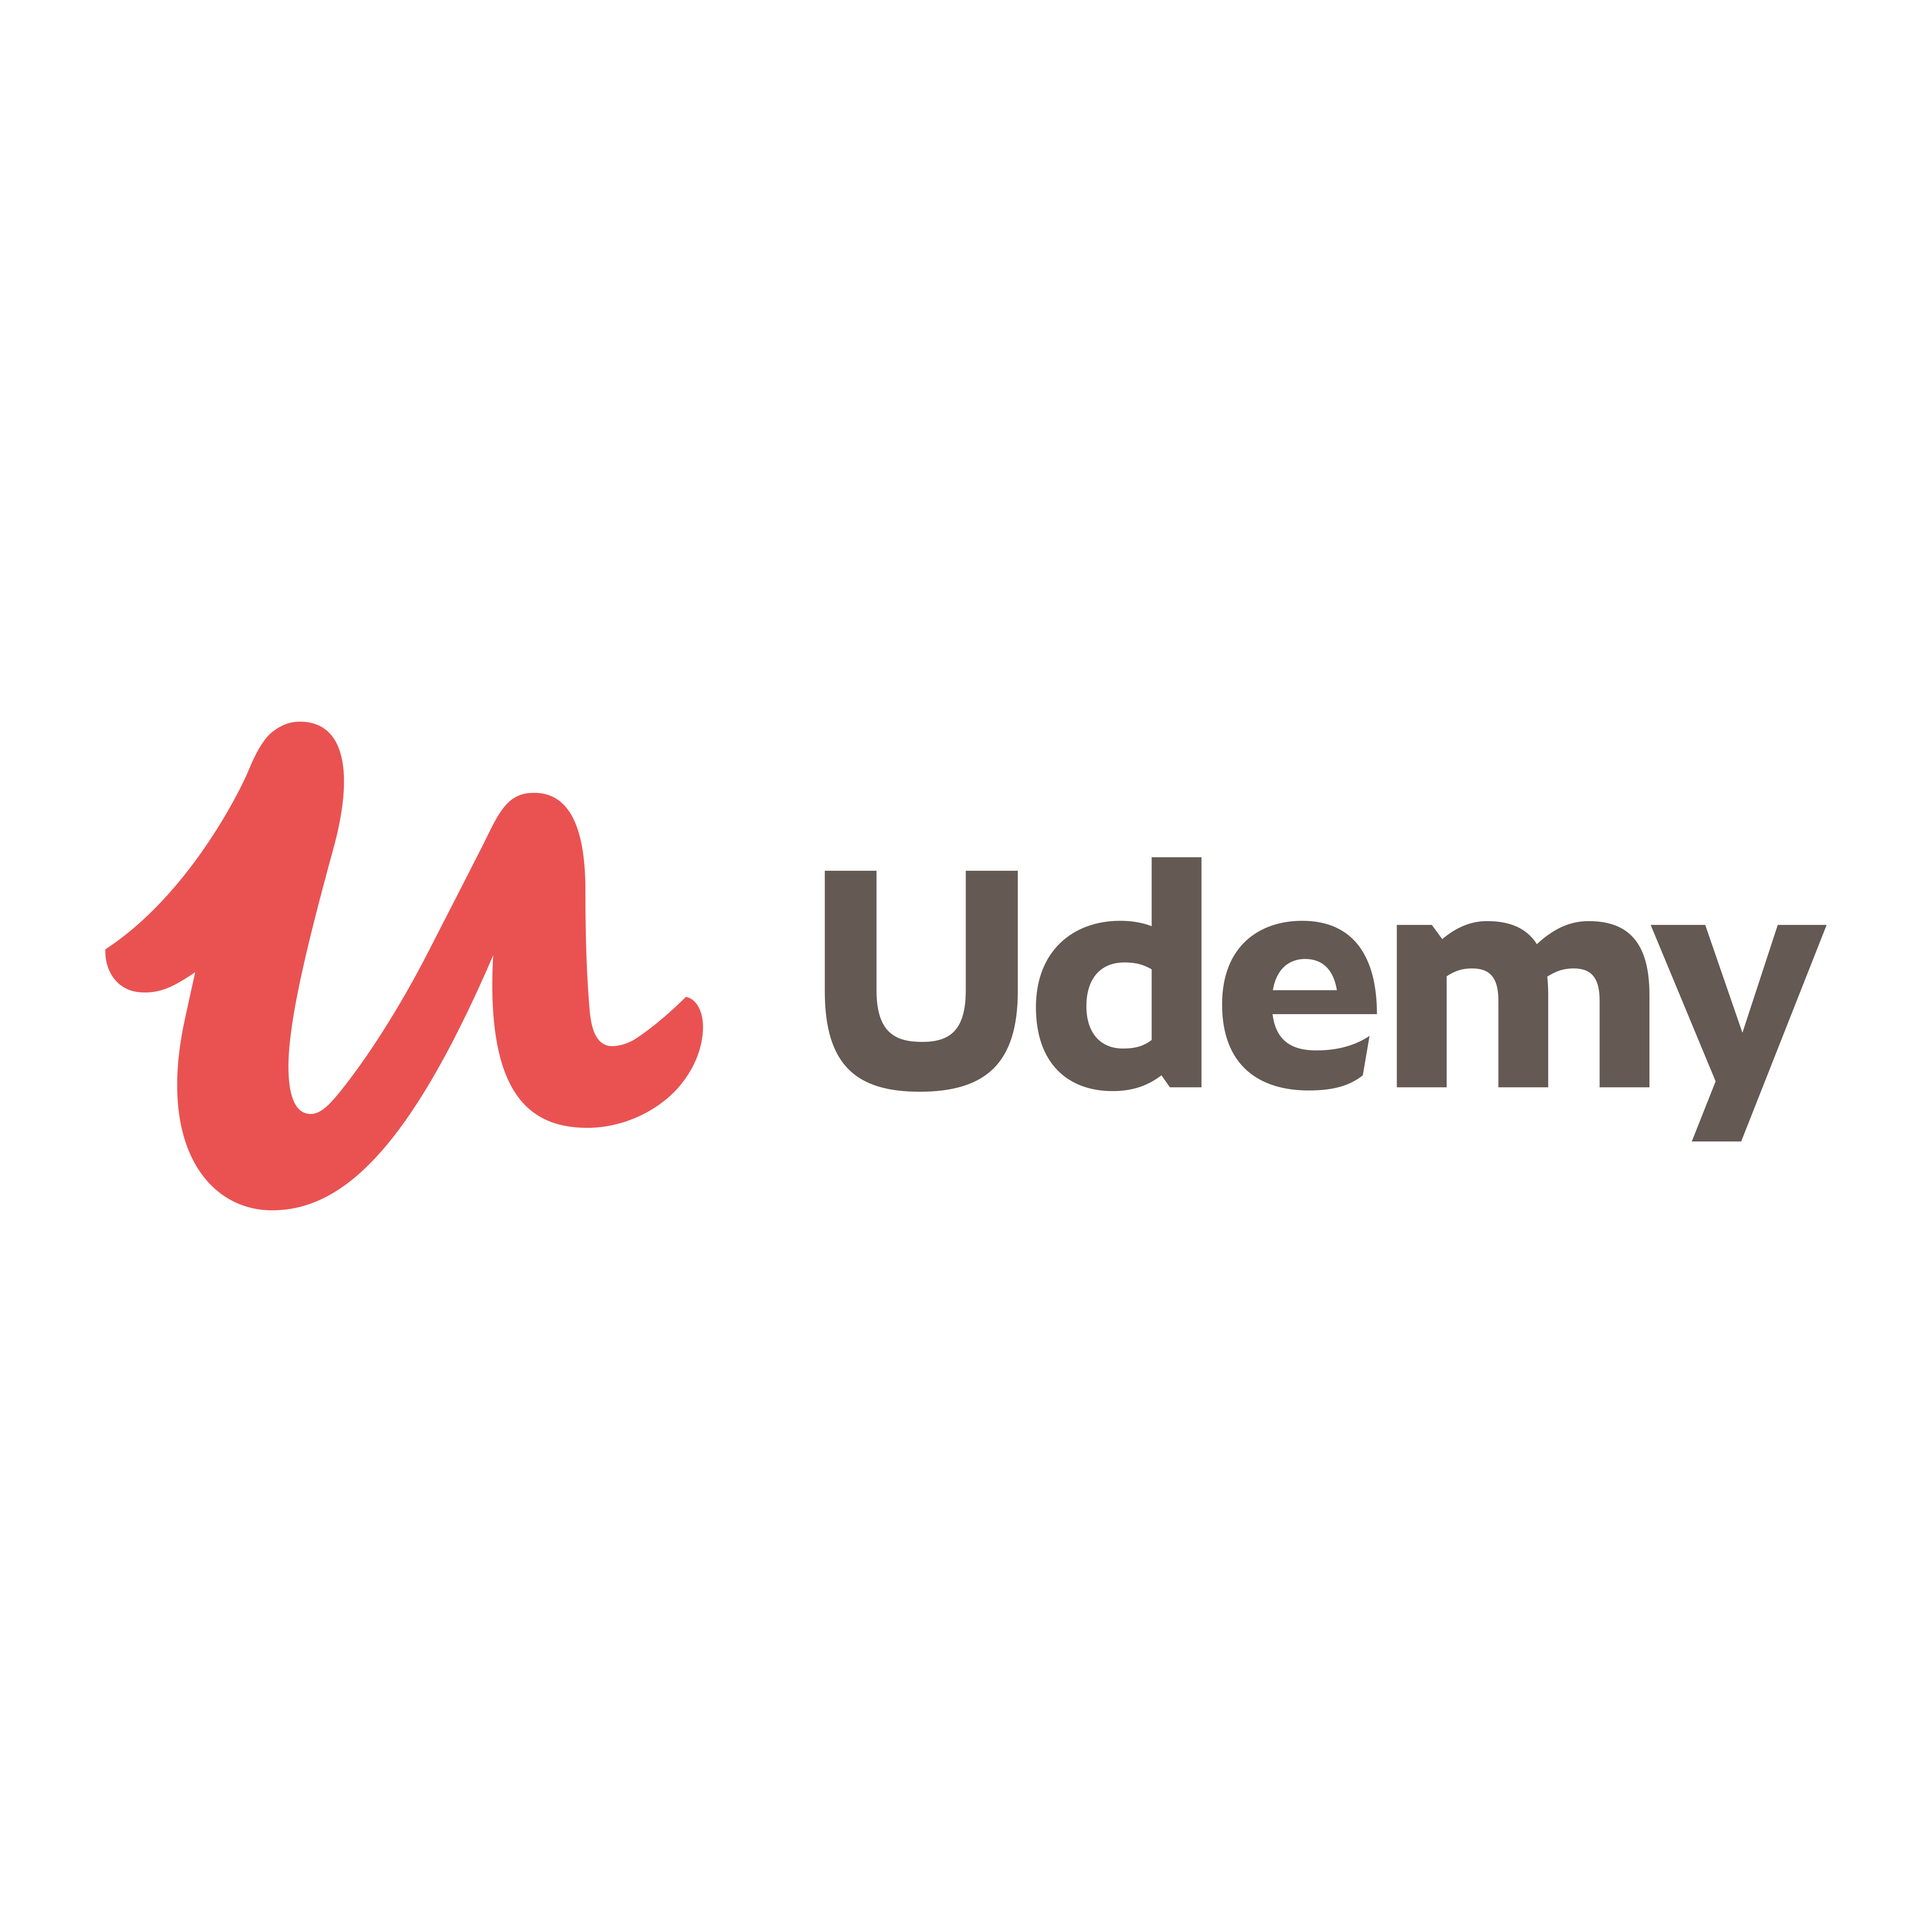 udemy logo 0 - Udemy Logo